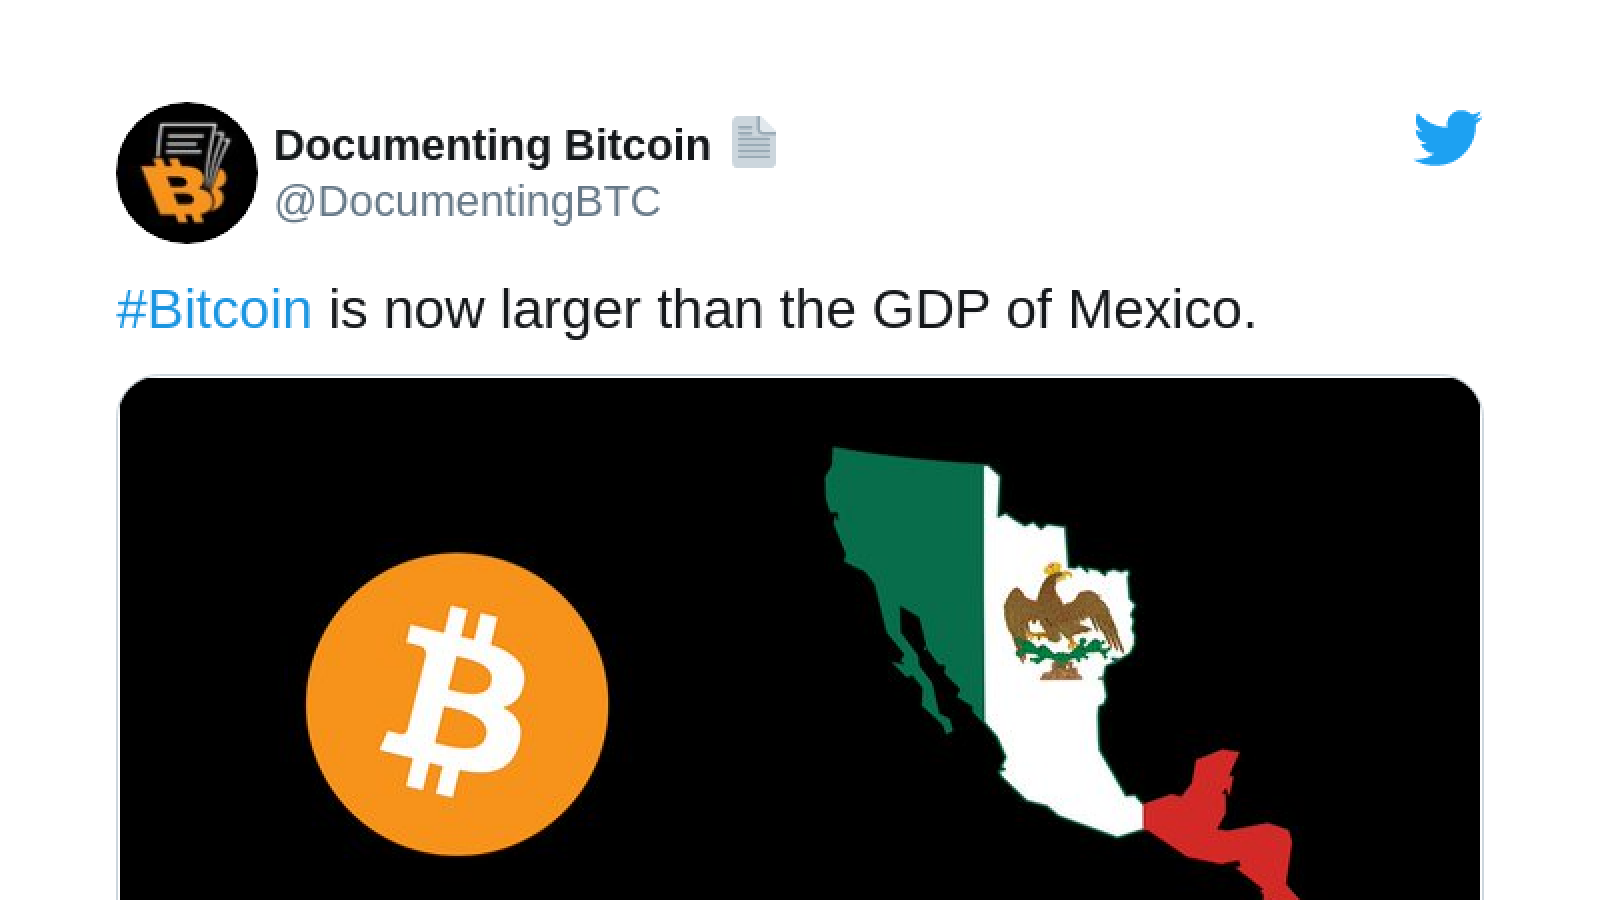 Bitcoin market cap surpassed Mexico's GDP